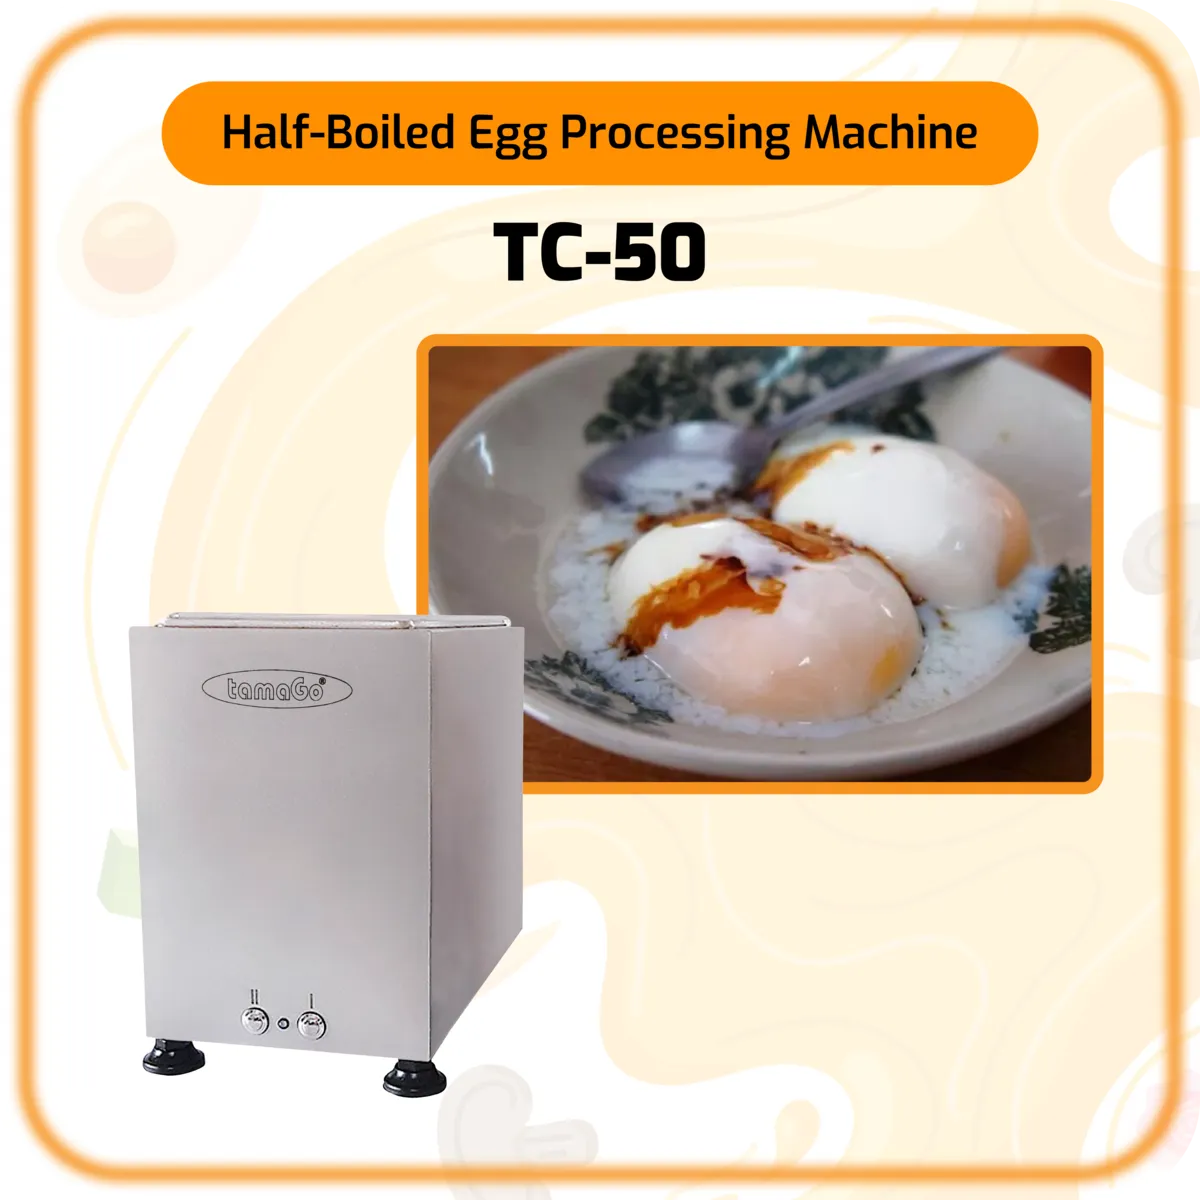 Half-Boiled Egg Processing Machine (TC-50)